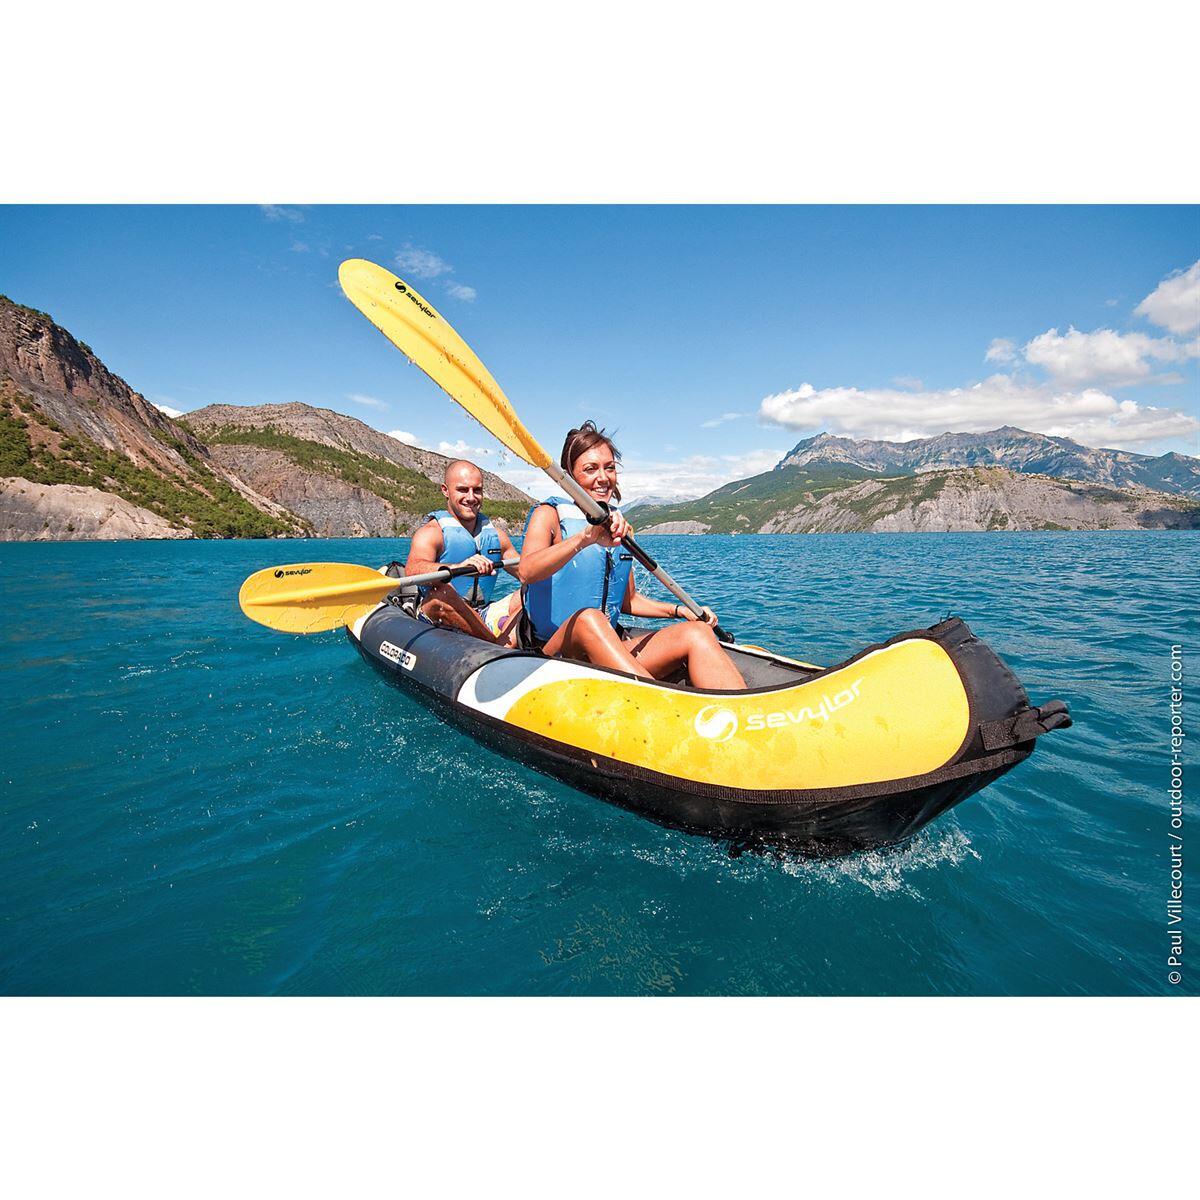 Colorado 2 Person Inflatable Touring Kayak - Yellow SEVYLOR